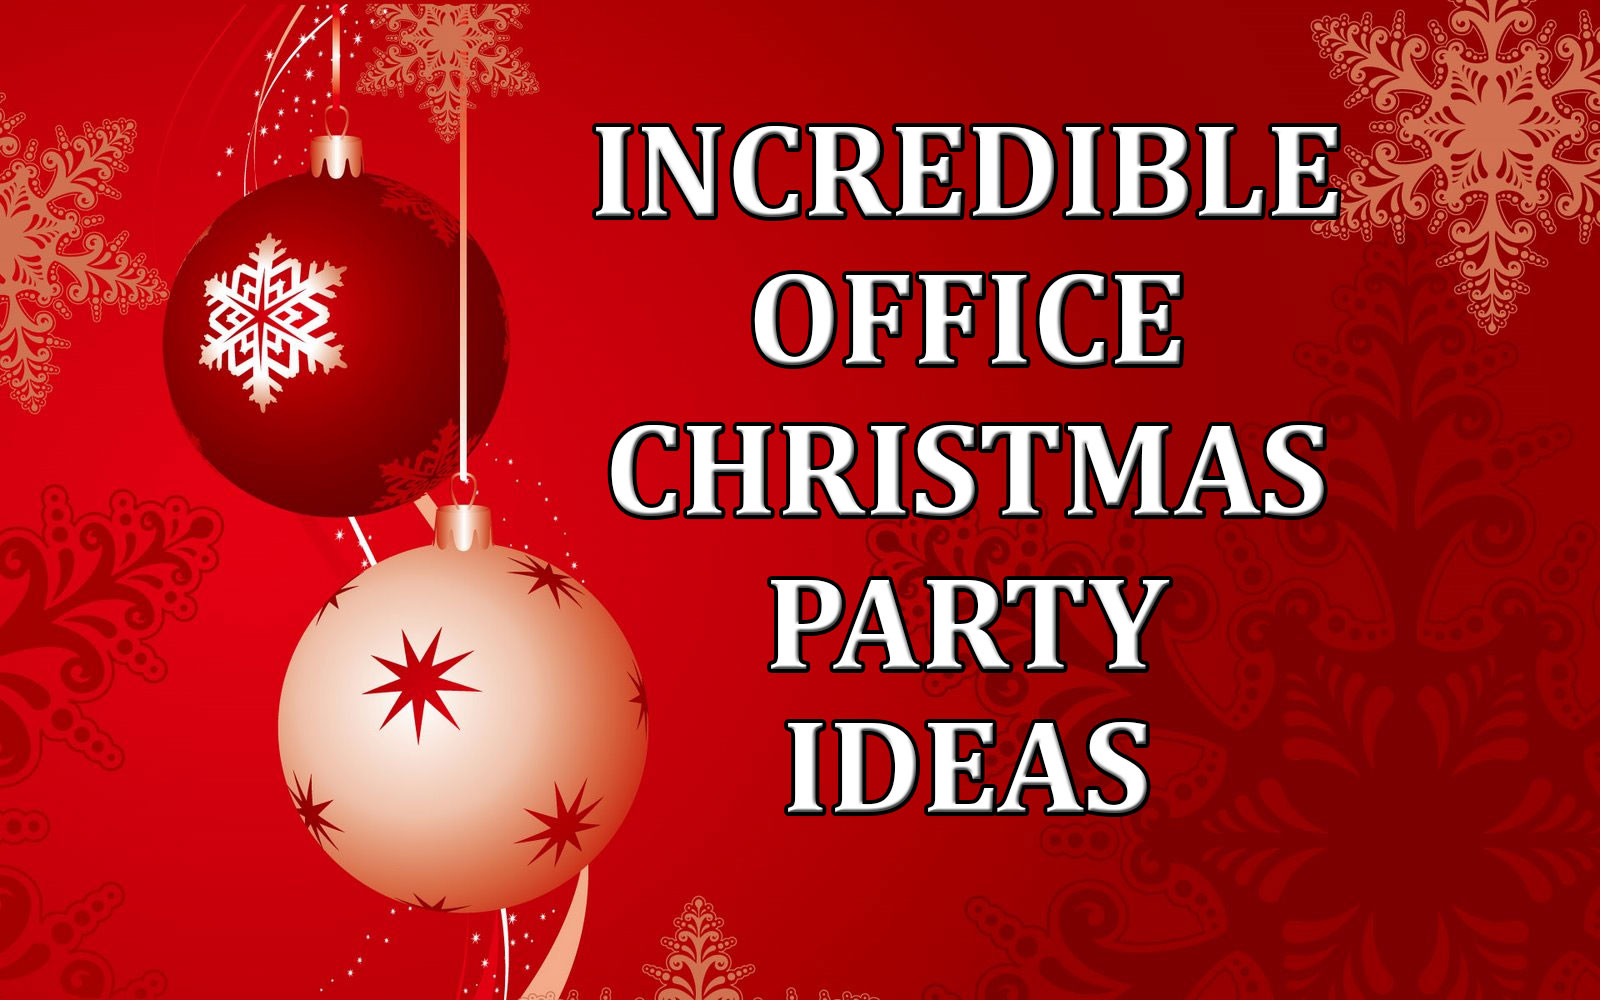 Fun Office Christmas Party Ideas
 Incredible fice Christmas Party Ideas edy Ventriloquist